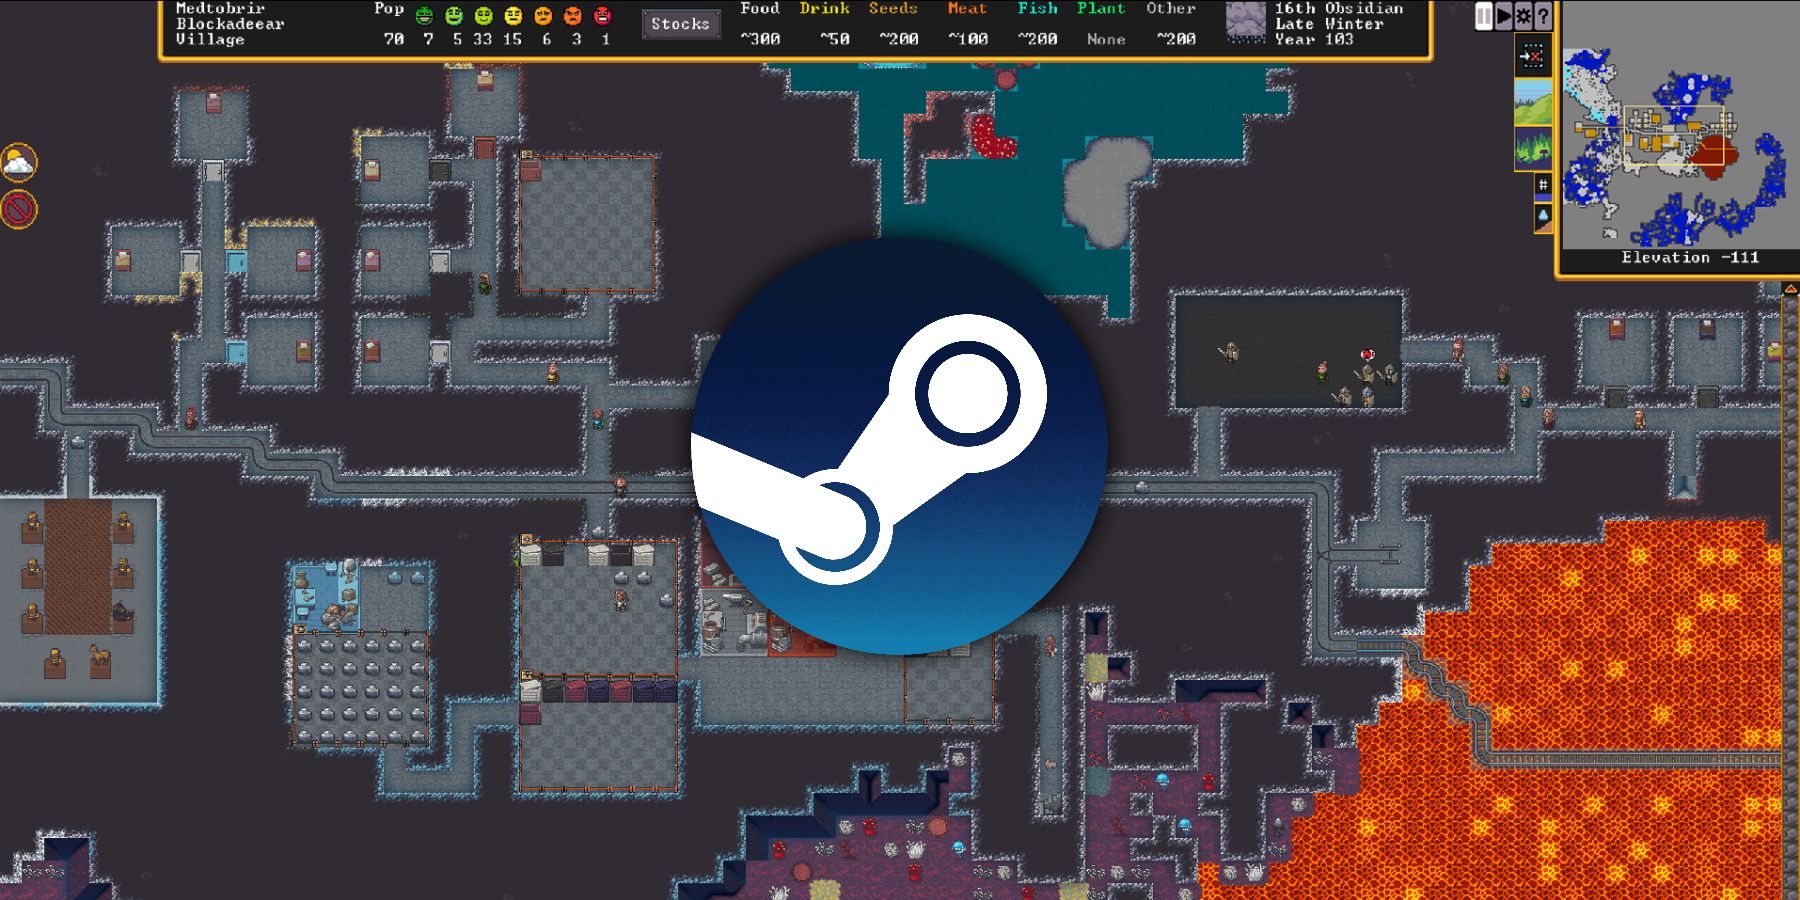 dwarf fortress screenshot overlayed with steam logo